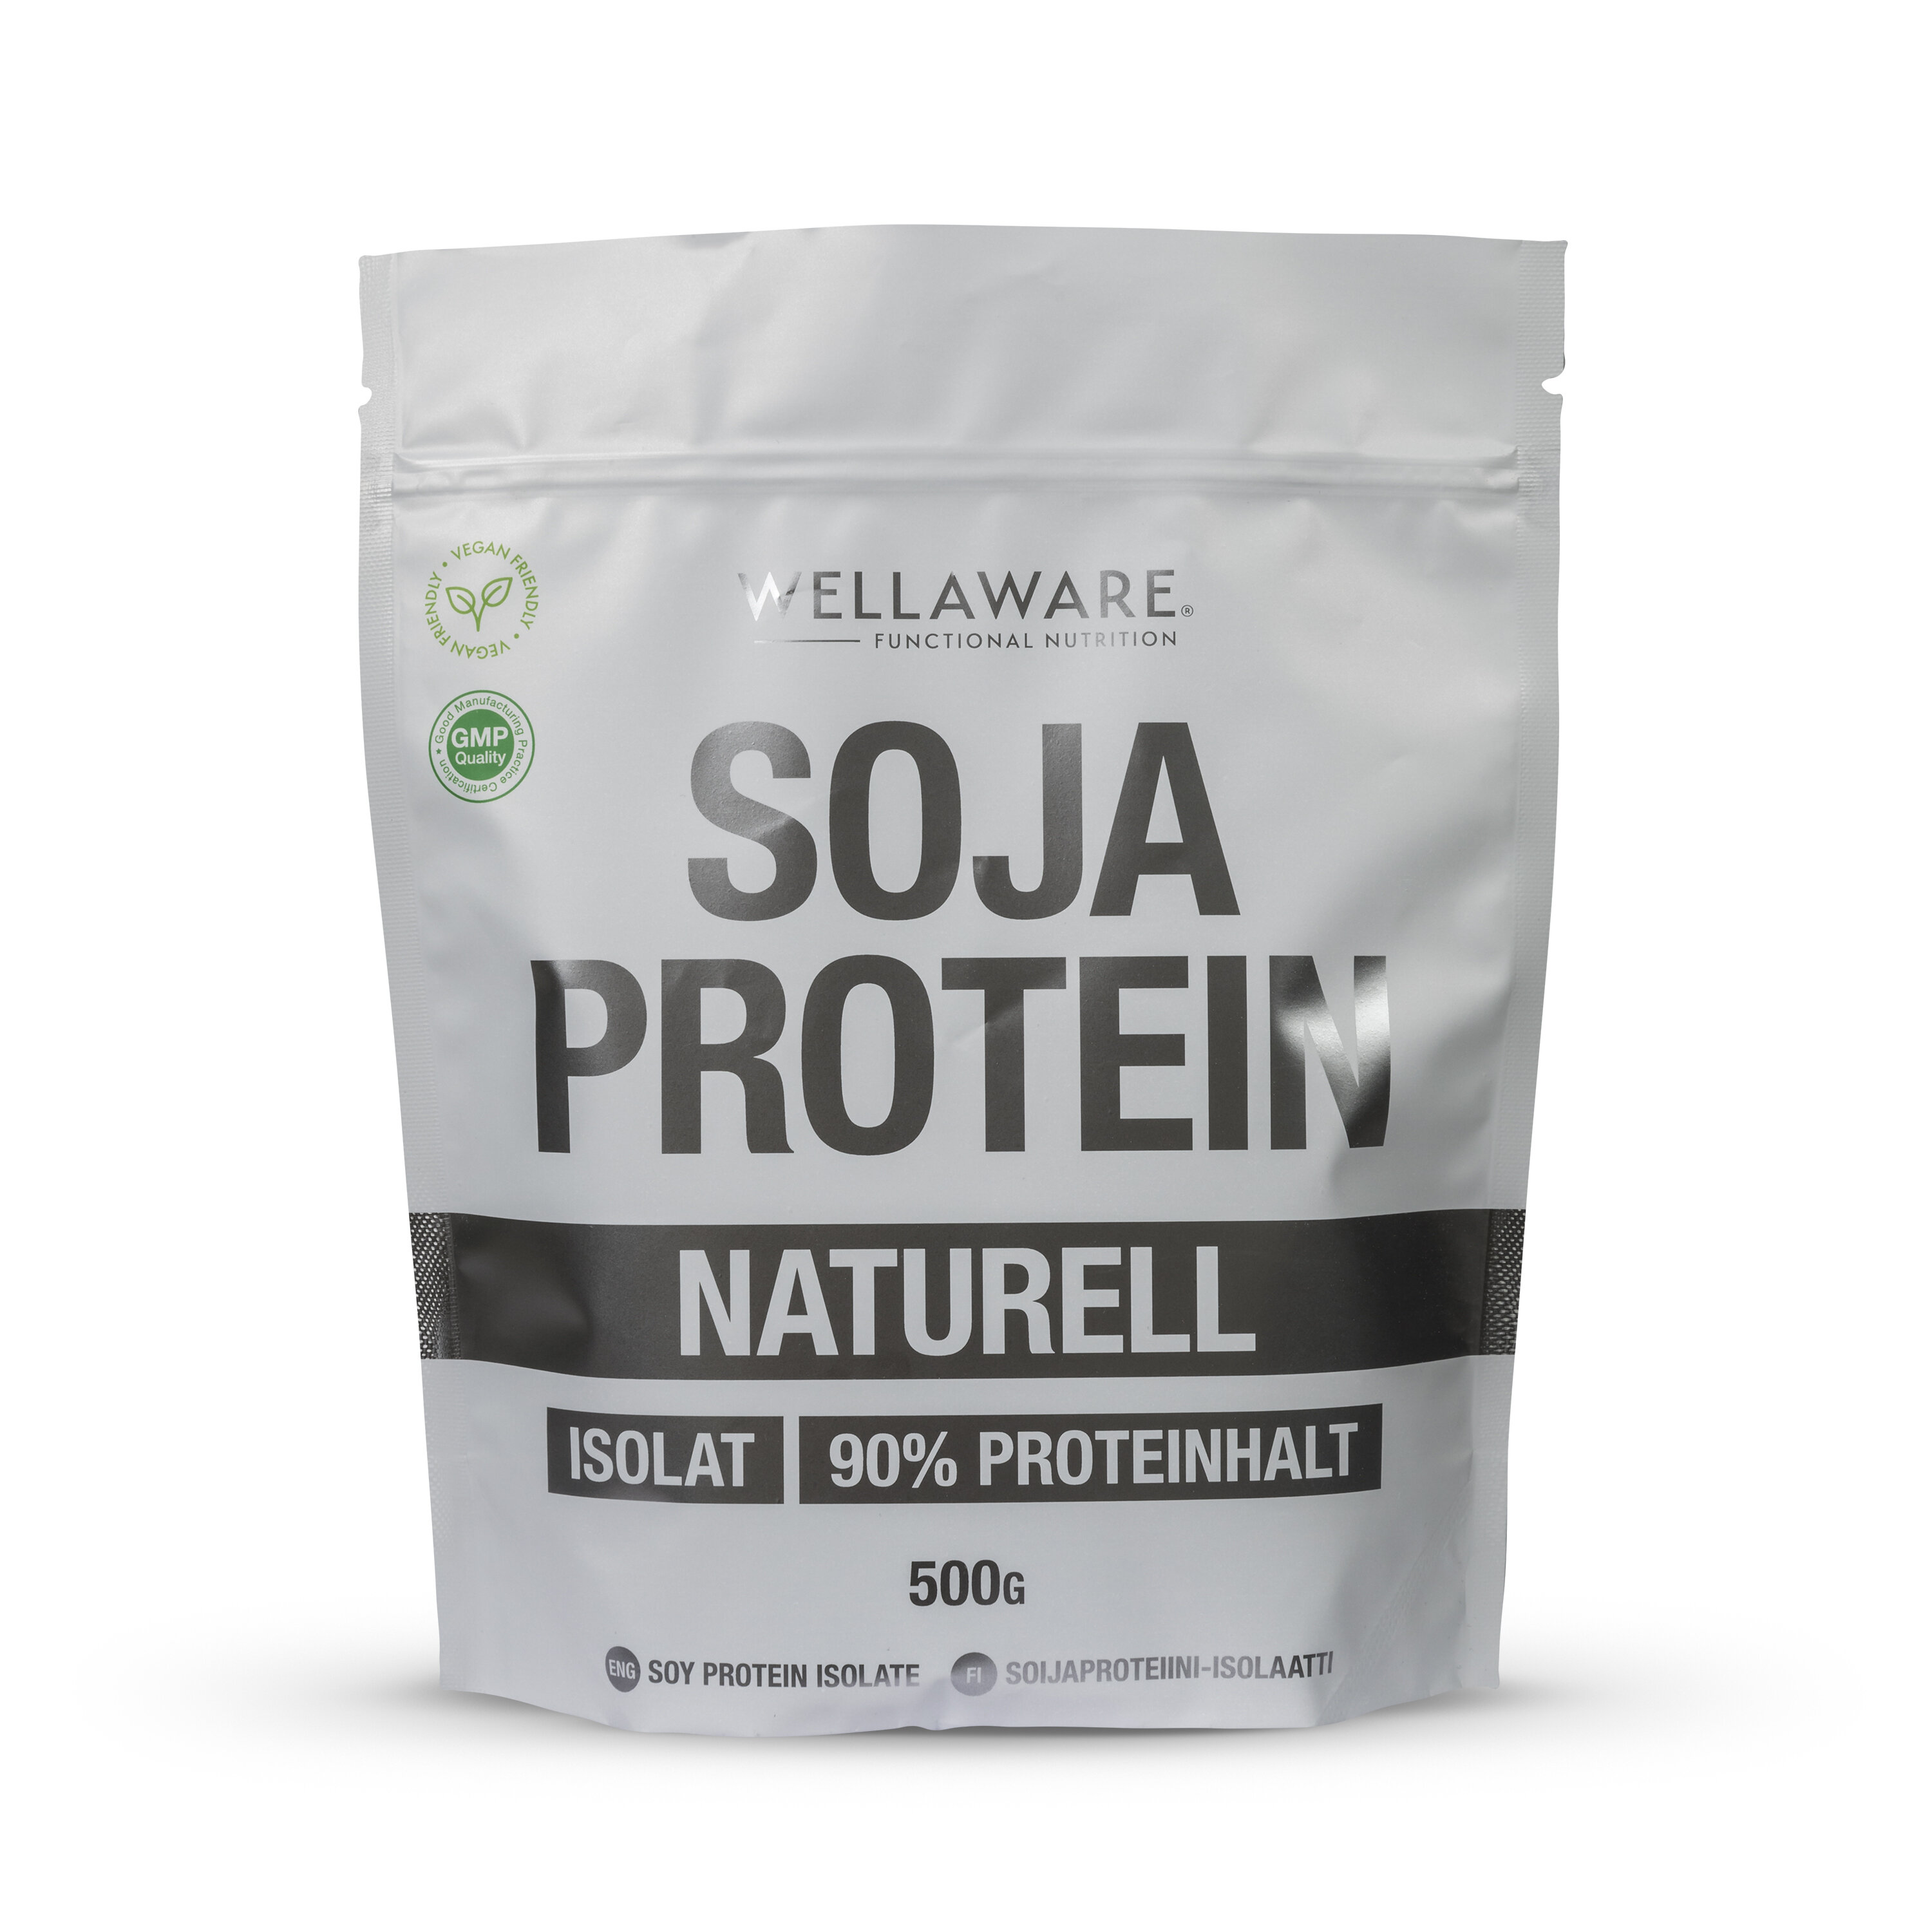 Sojaprotein isolat naturell 500g